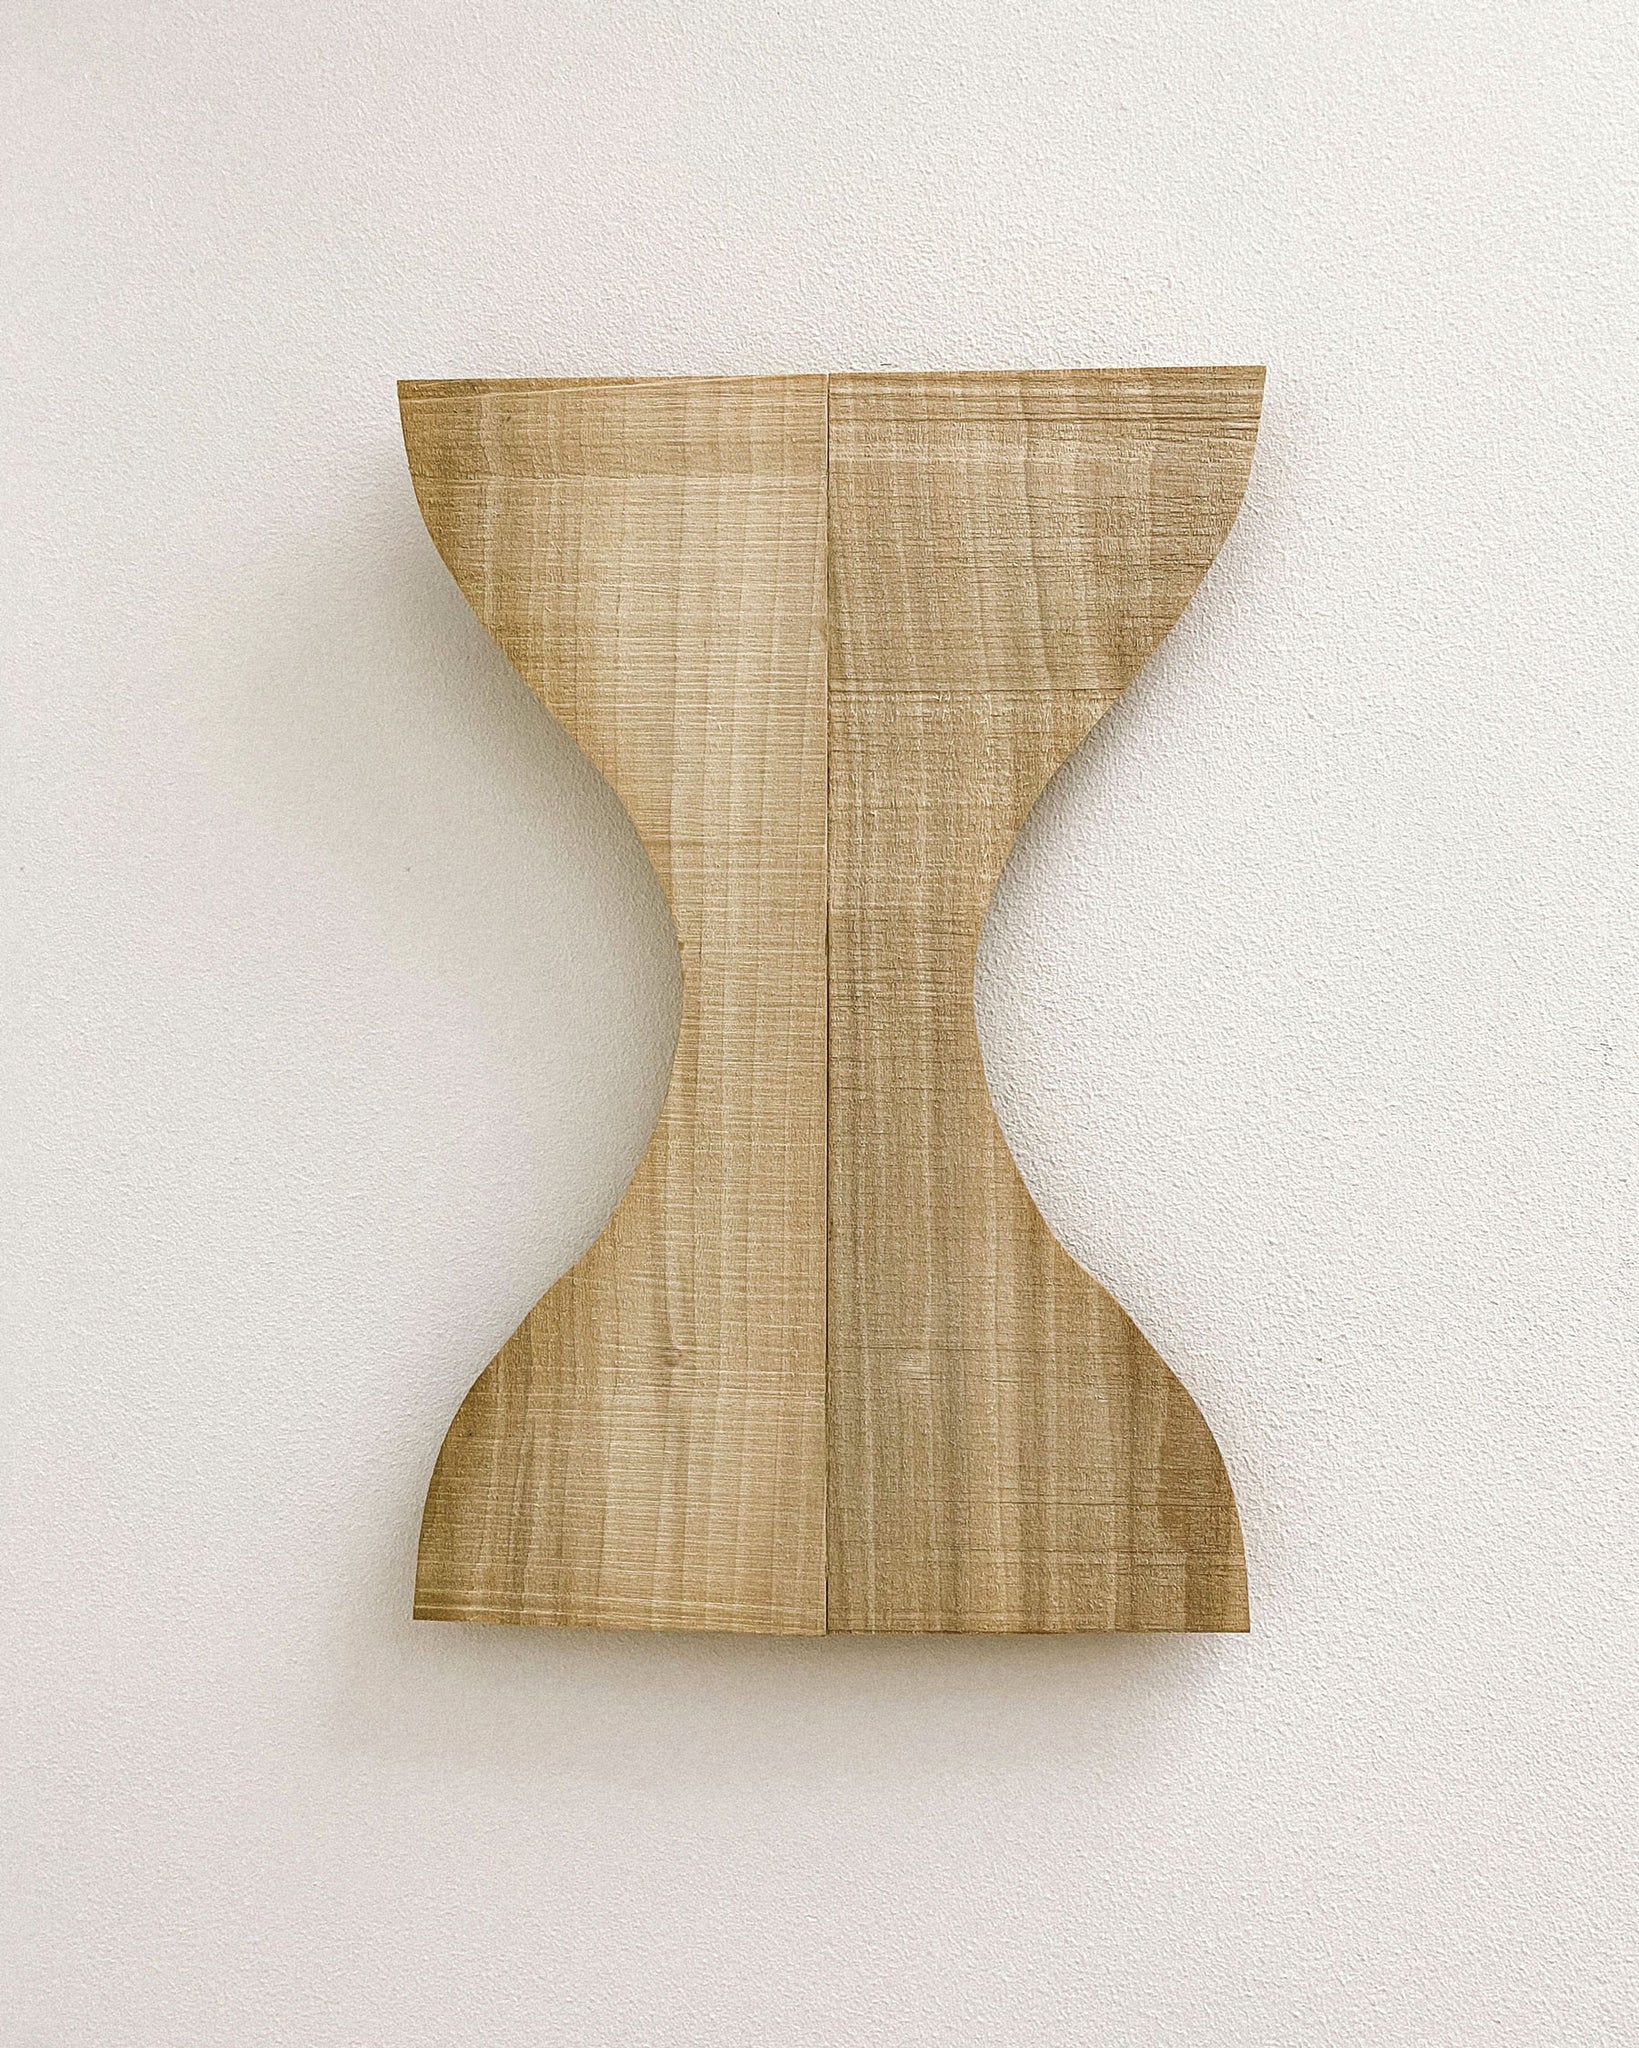 Wooden Sculpture No. 4